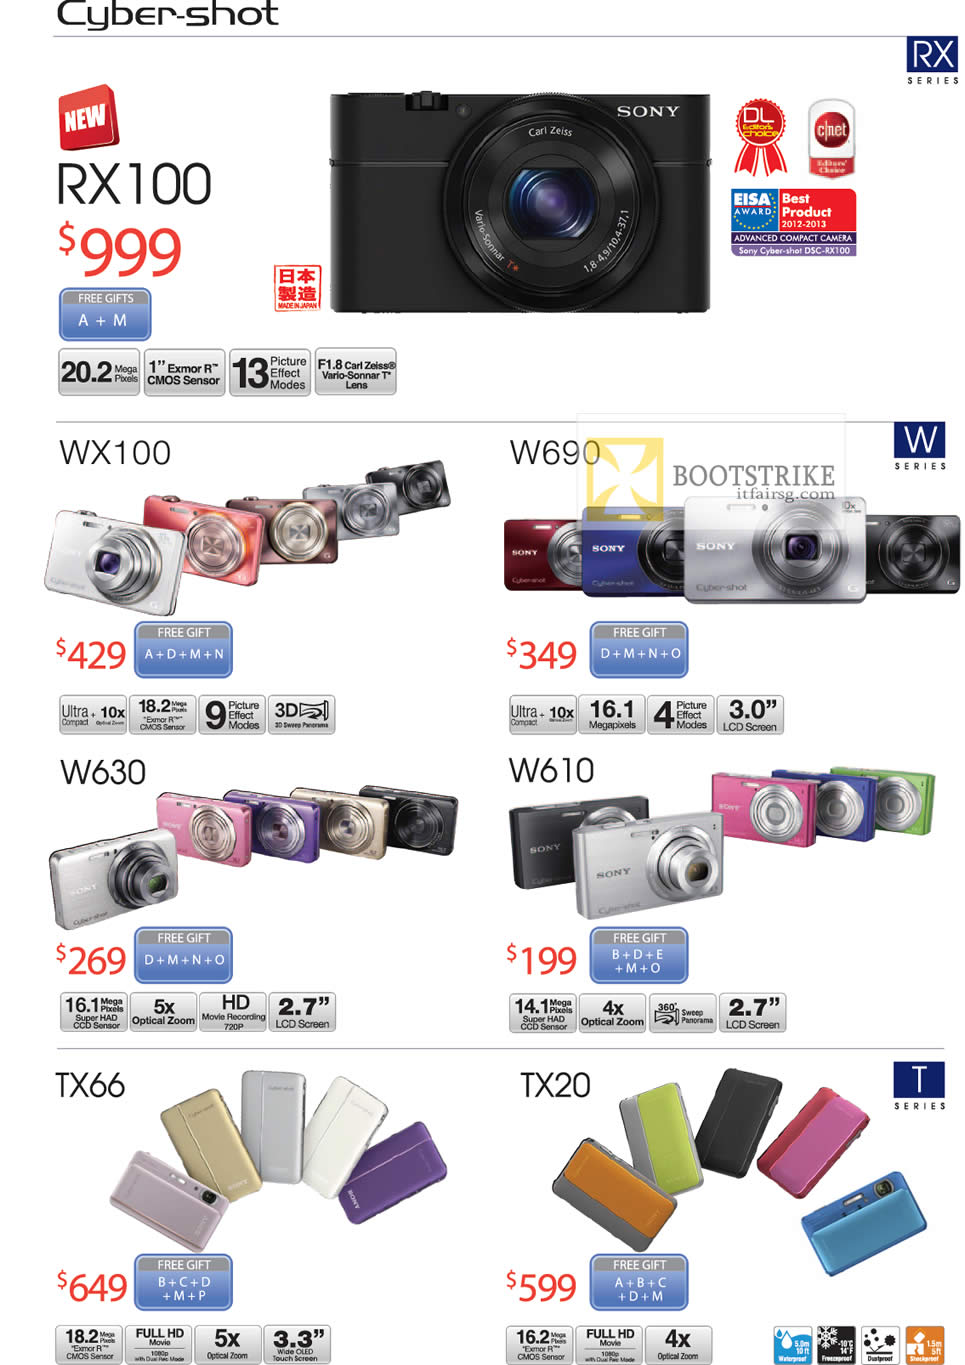 COMEX 2012 price list image brochure of Sony Cybershot Digital Cameras DSC RX100, WX100, W690, W610, W630, TX20, TX66